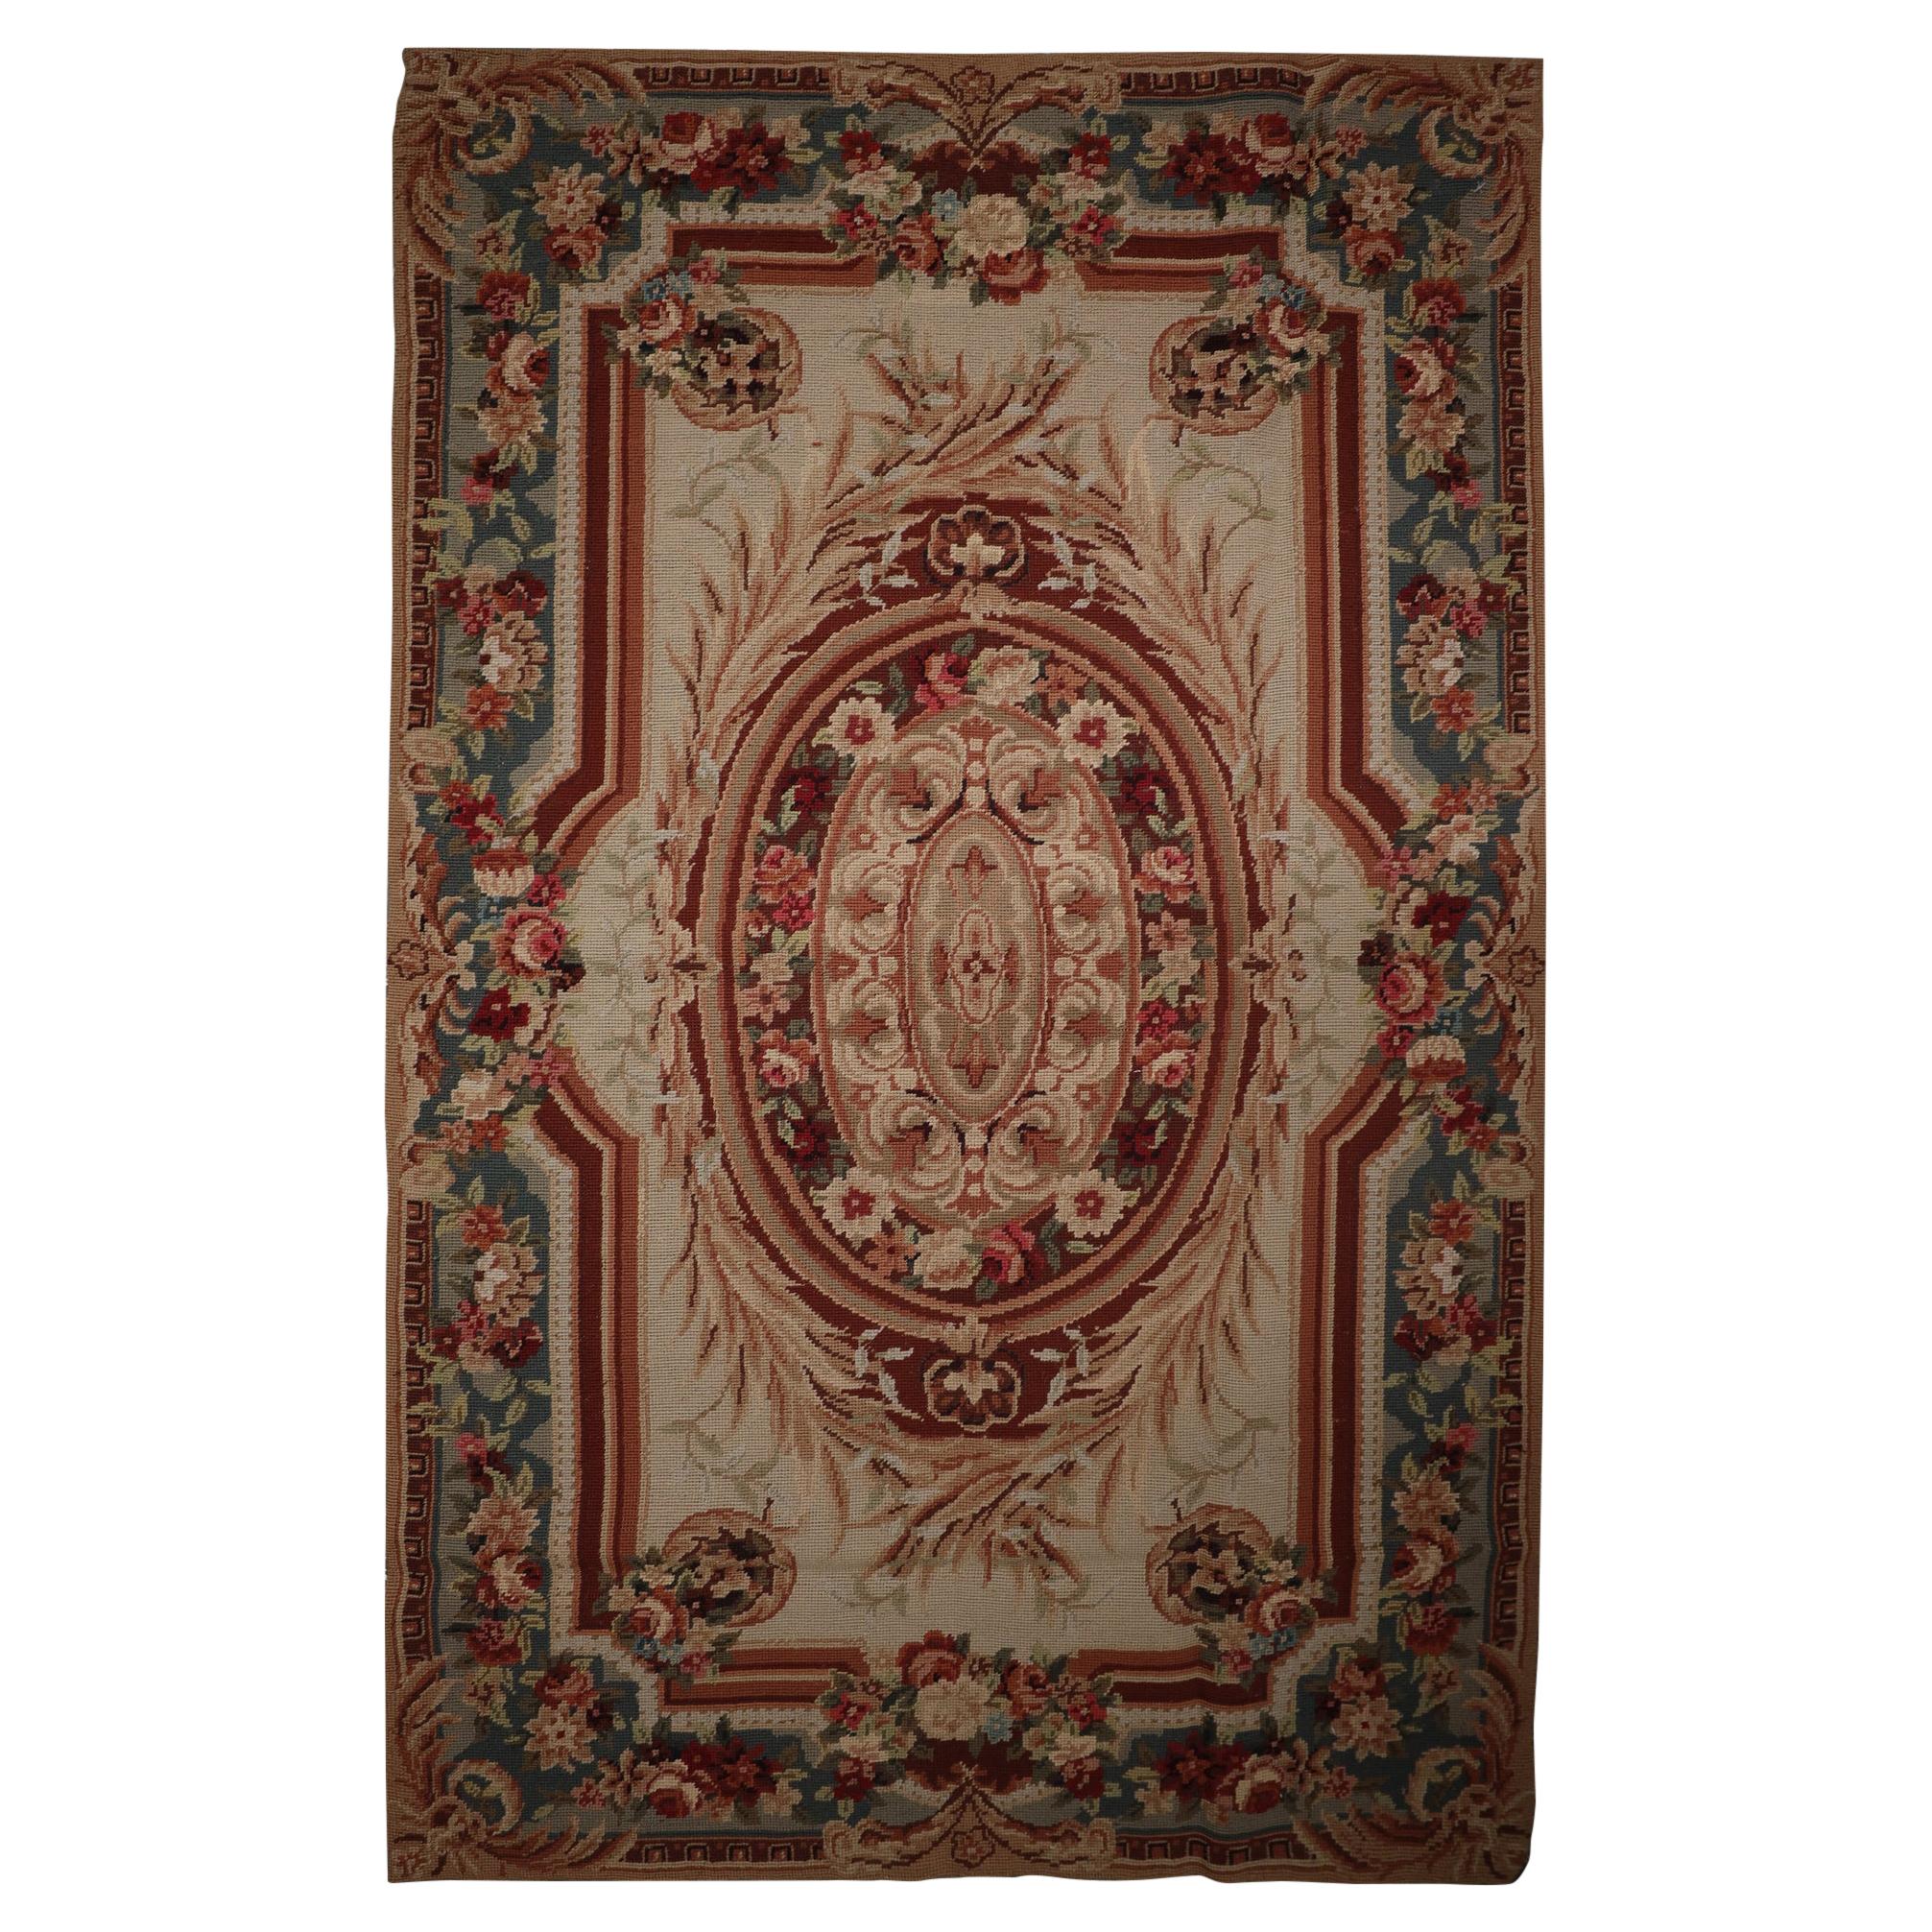 Decorative Handmade Carpet Needlepoint Rug Traditional Beige Tapestry Rug